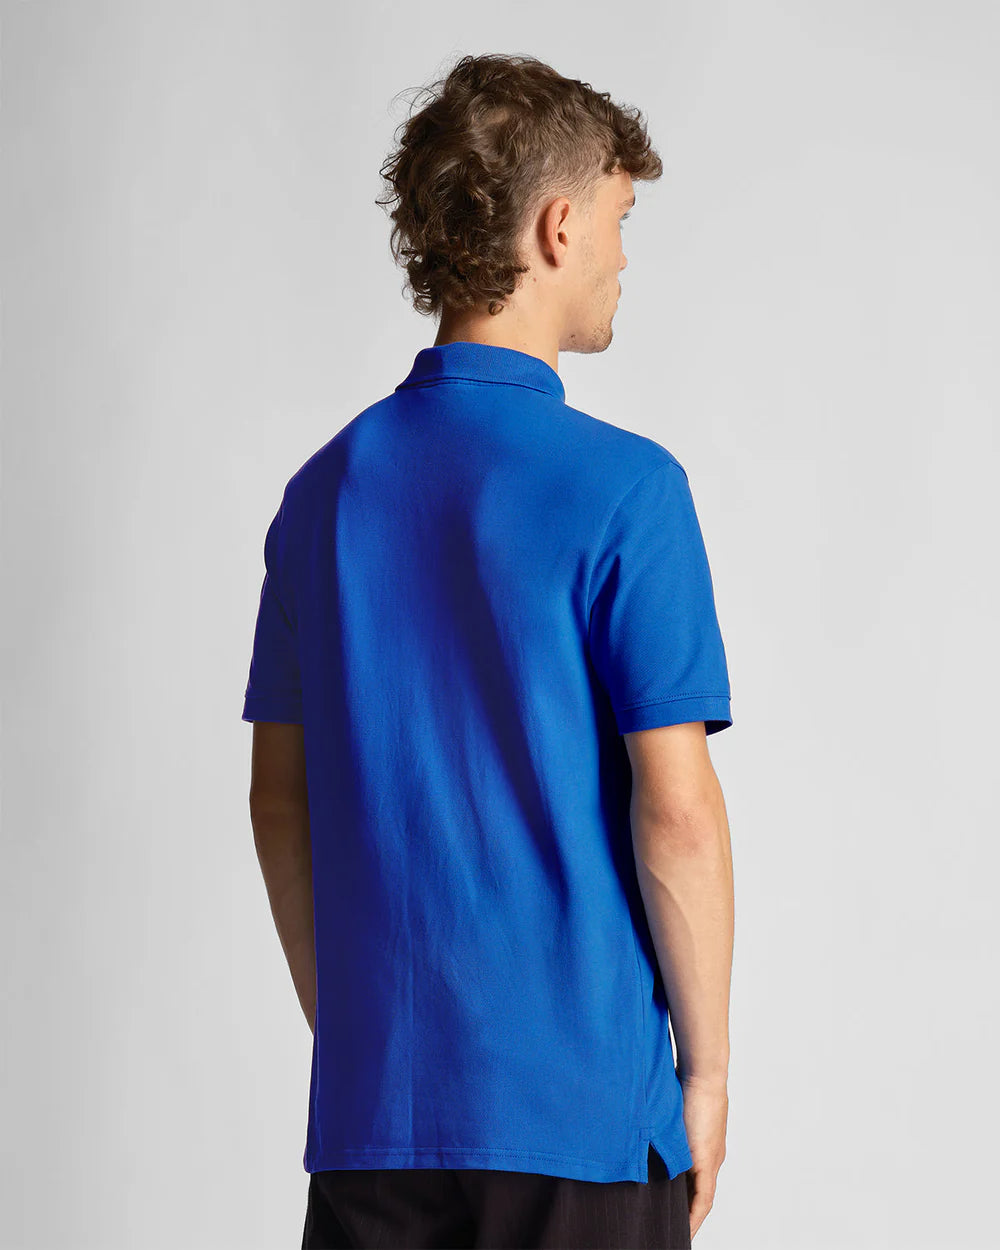 Plain Polo Shirt, Bright Blue - Lyle&Scott